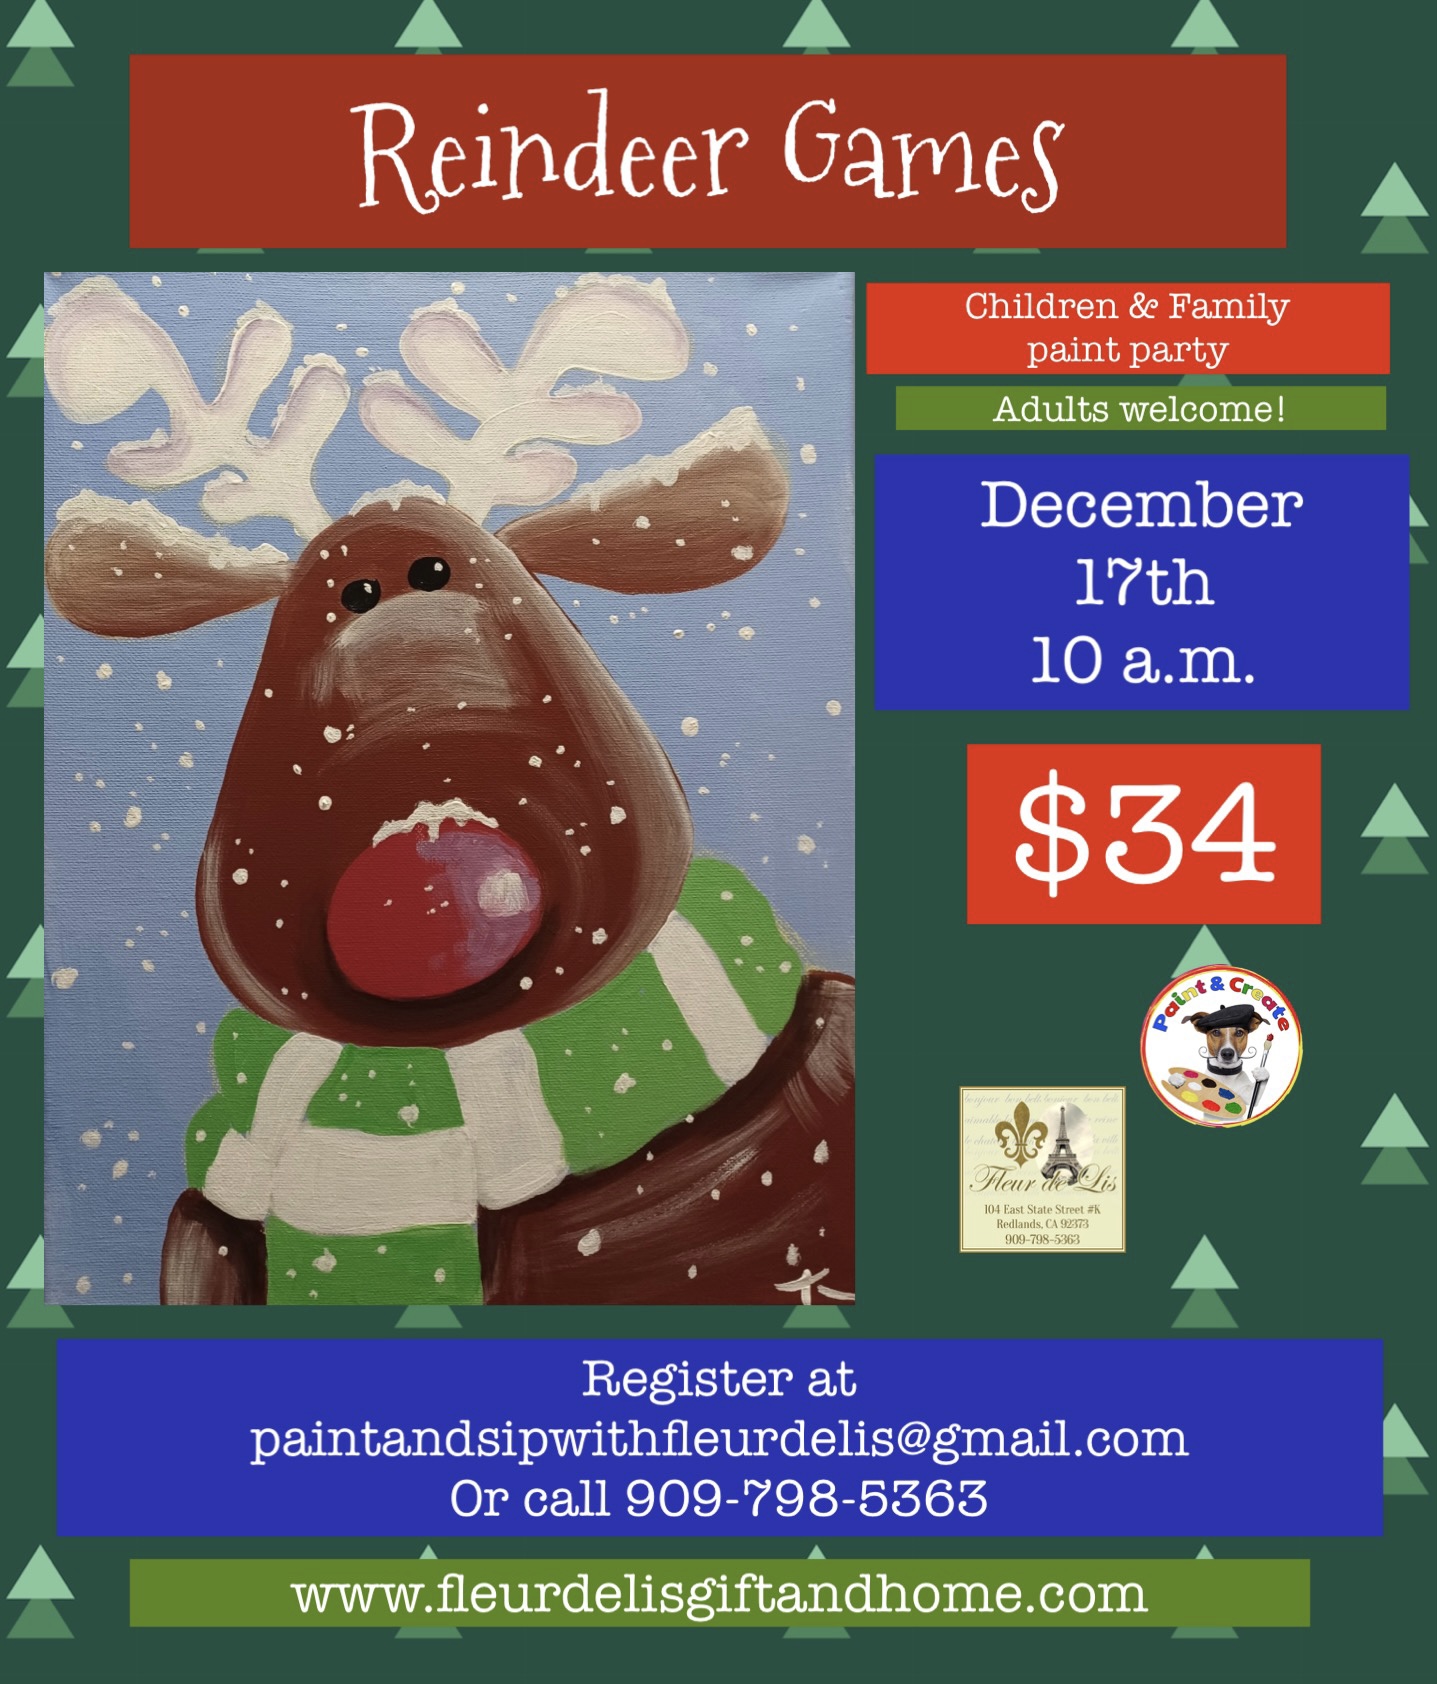 December 17th 10 a.m. Reindeer Games